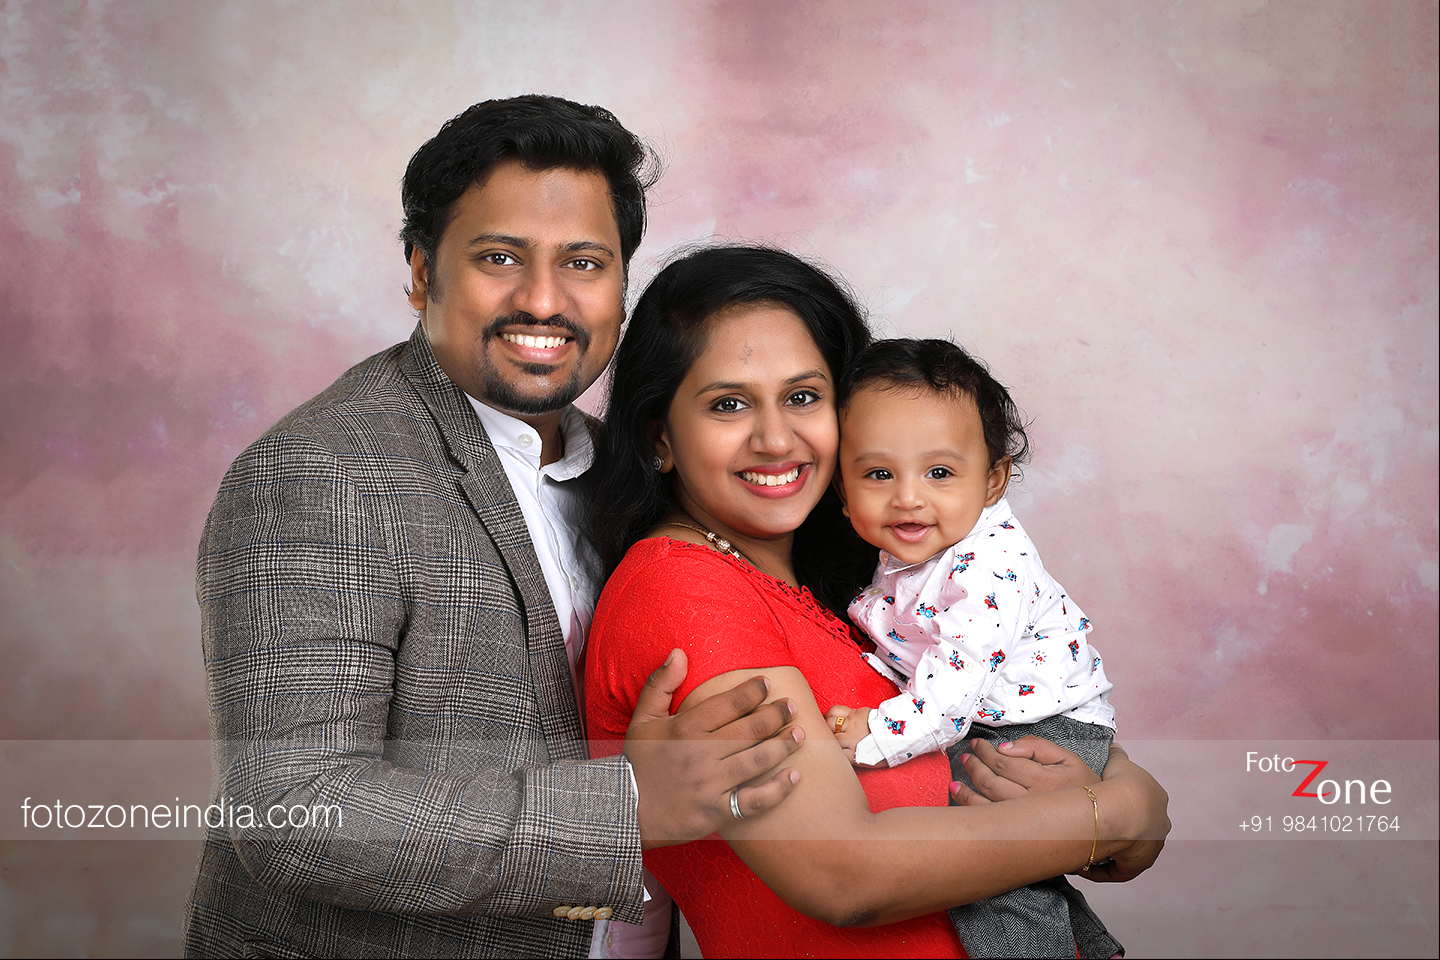 Studio Family Portrait Photography Ideas — Award Winning Photography